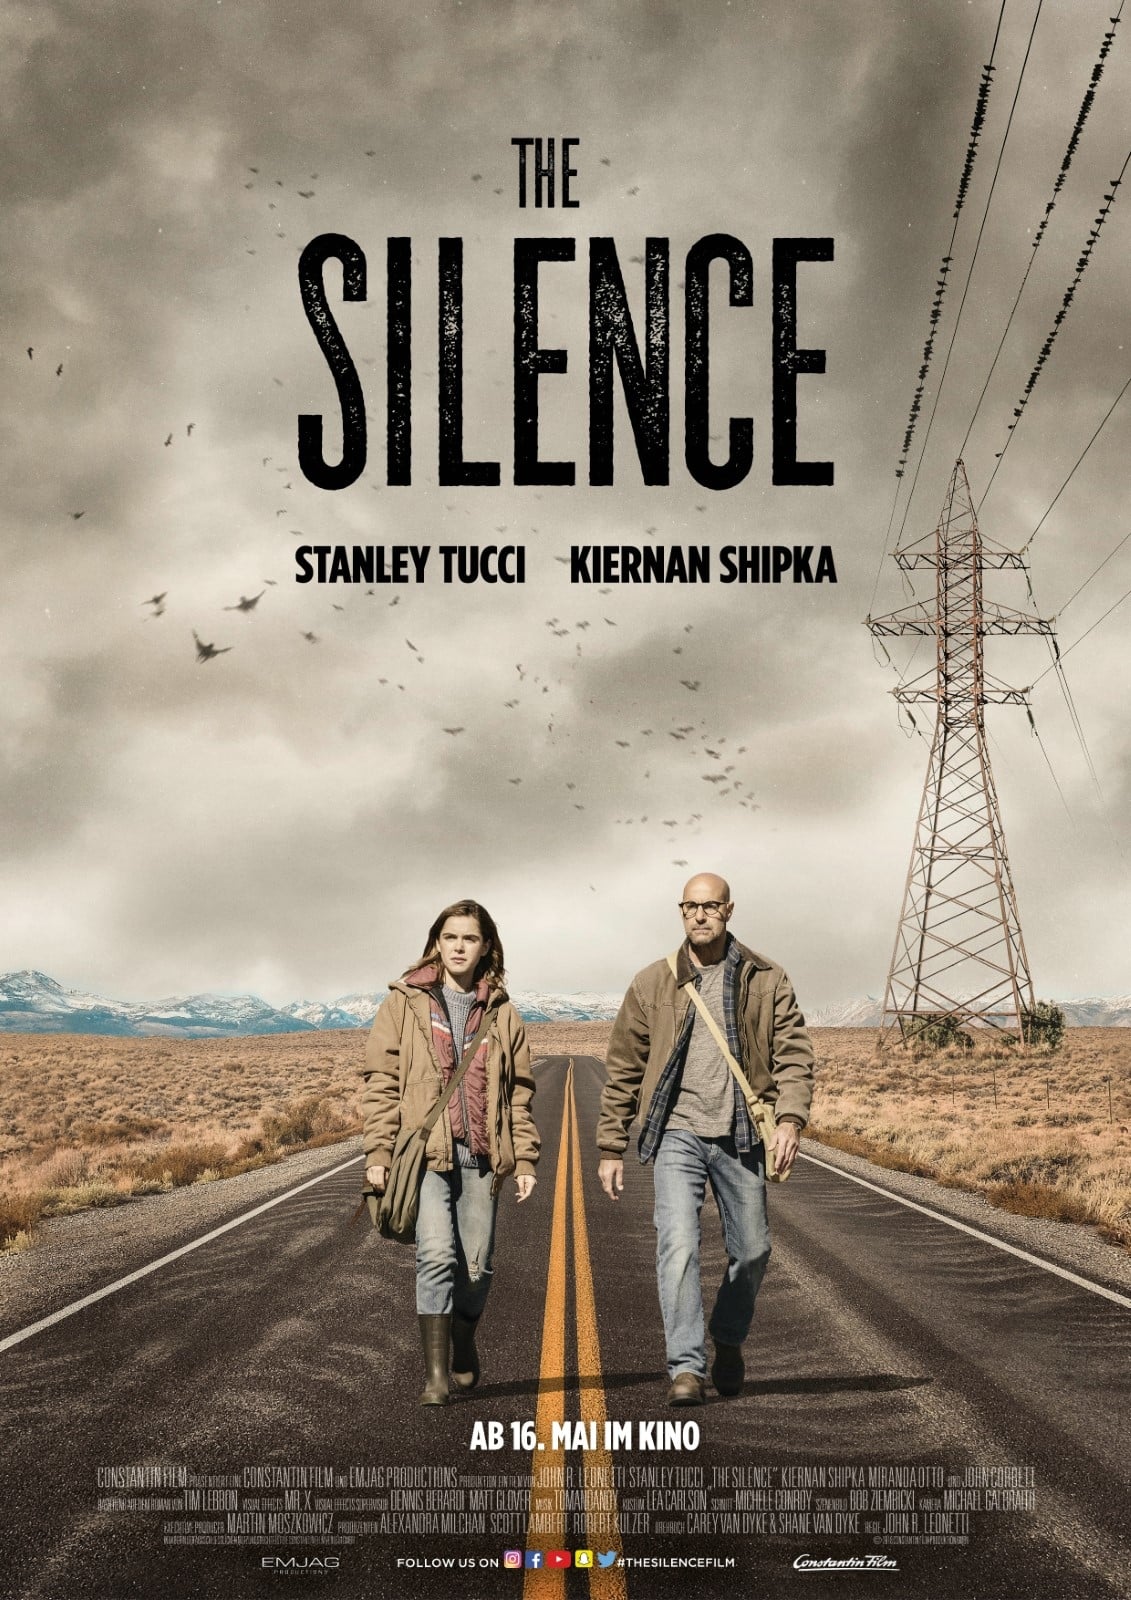 Plakat von "The Silence"